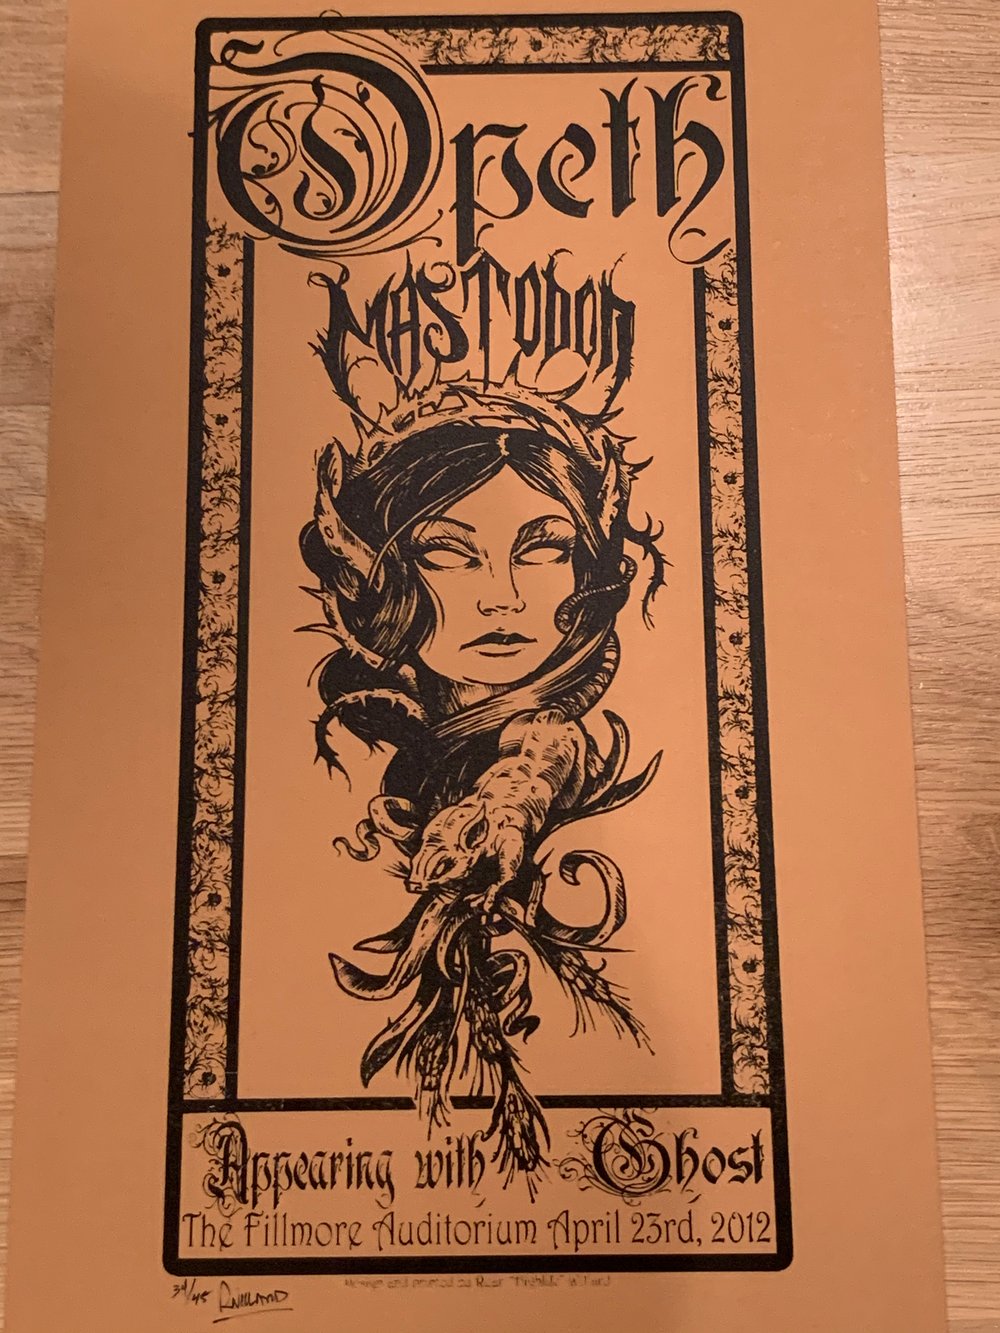 Opeth / Mastodon / Ghost Brown Silkscreen Concert Poster By Ryan Willard, Signed & Numbered